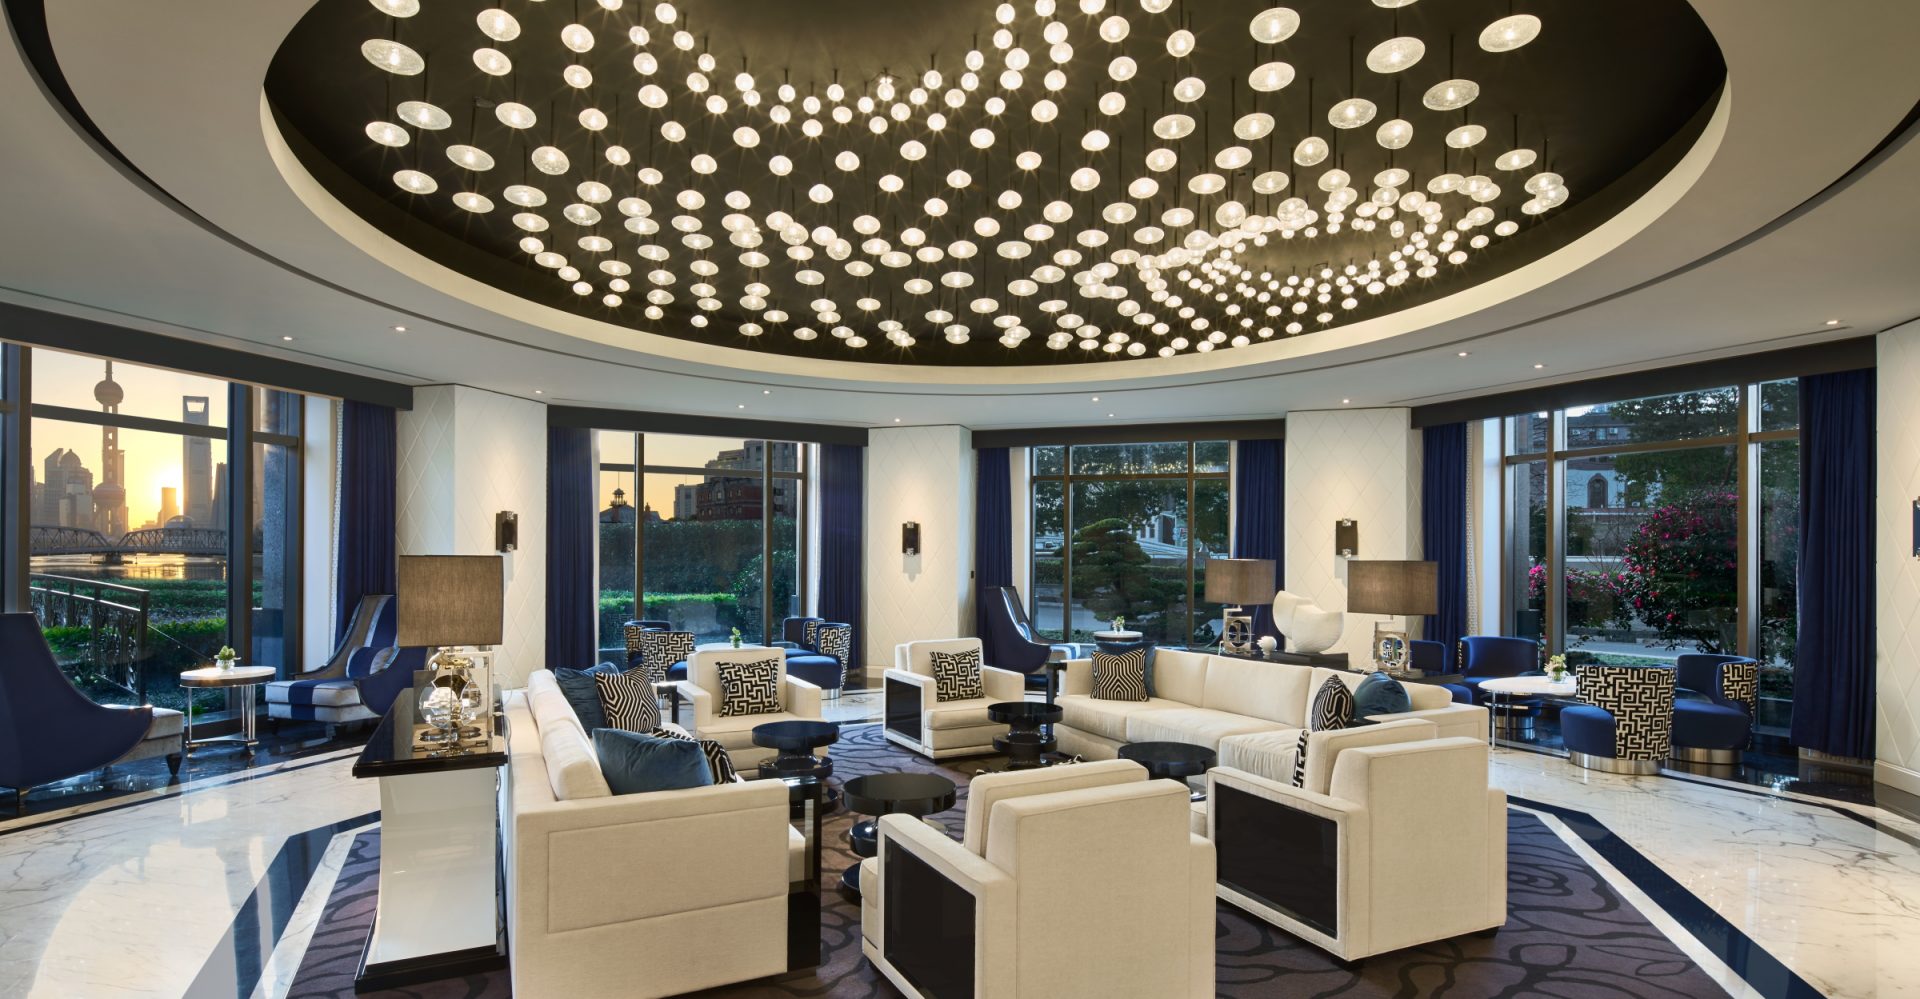 Neoclassical style Super Luxury Hotel Design